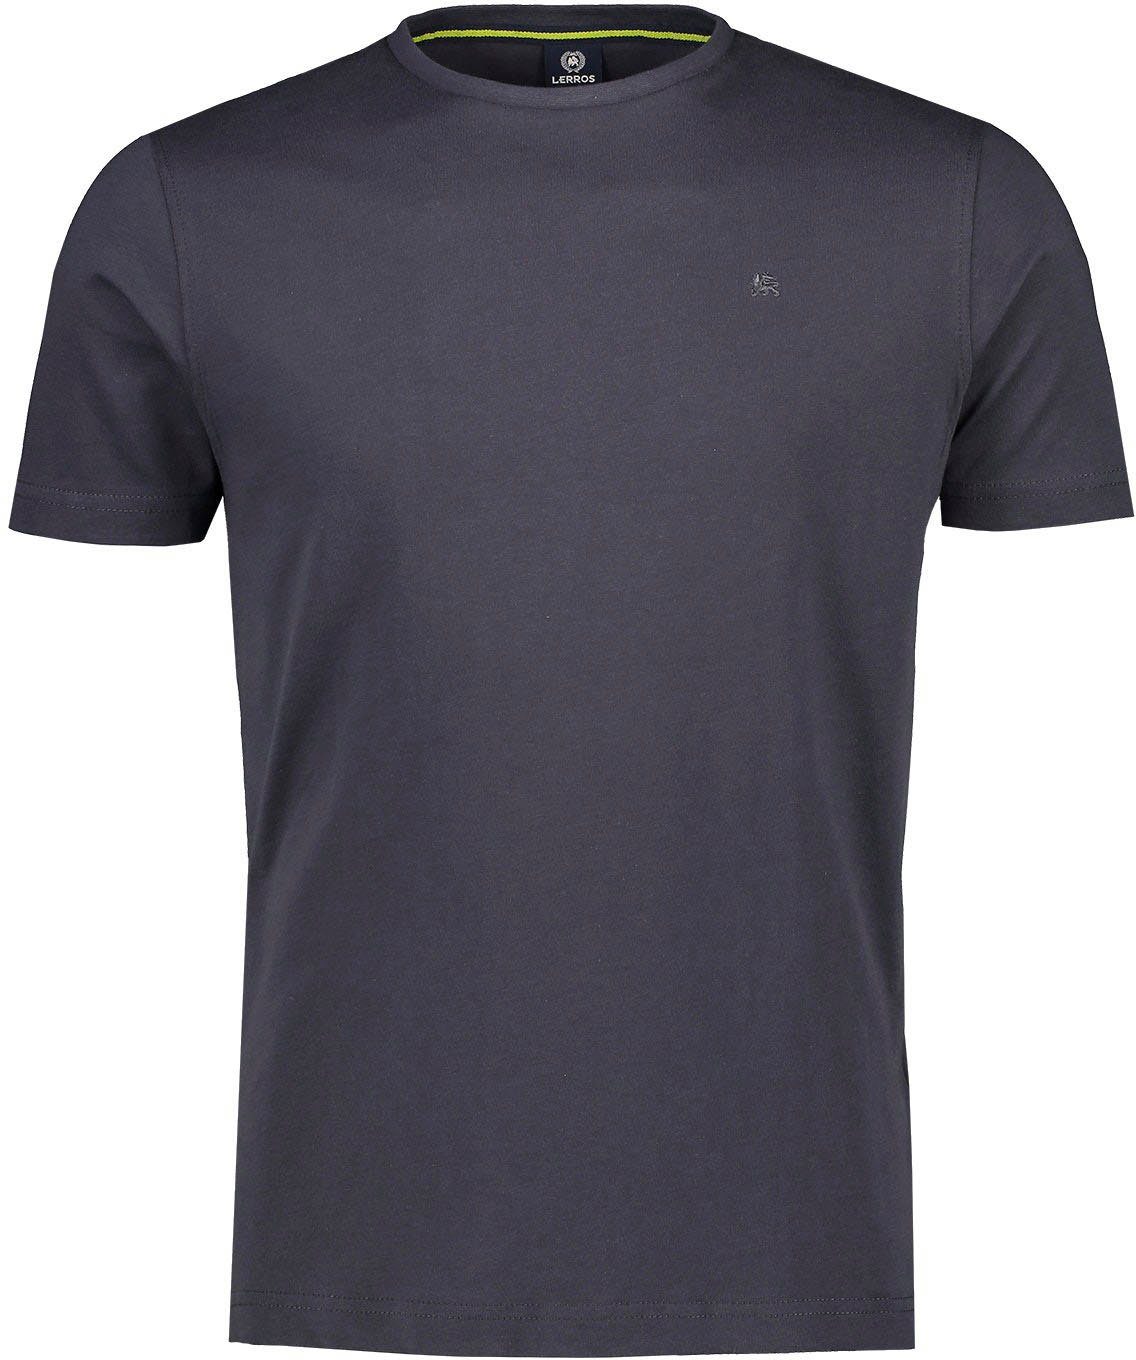 grey rock LERROS im Basic-Look T-Shirt